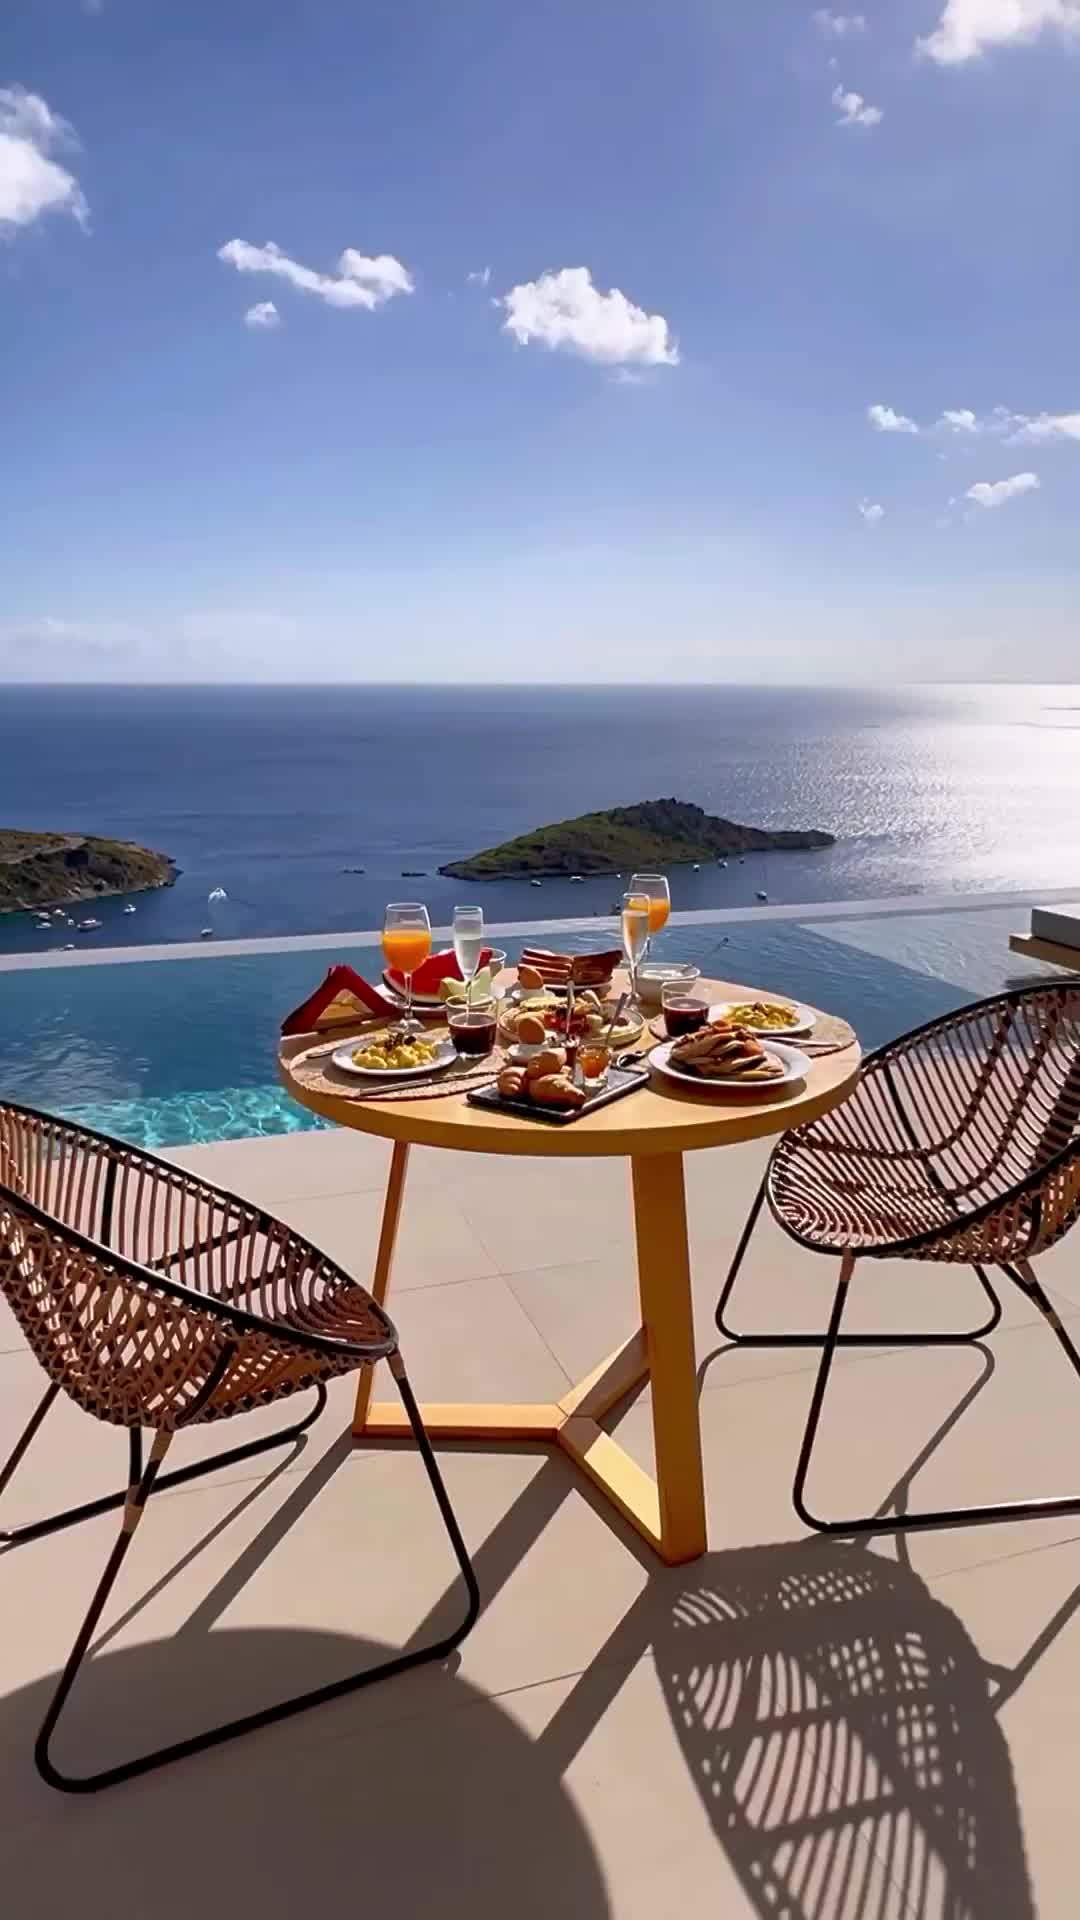 Luxurious Breakfast with a View in Zakynthos